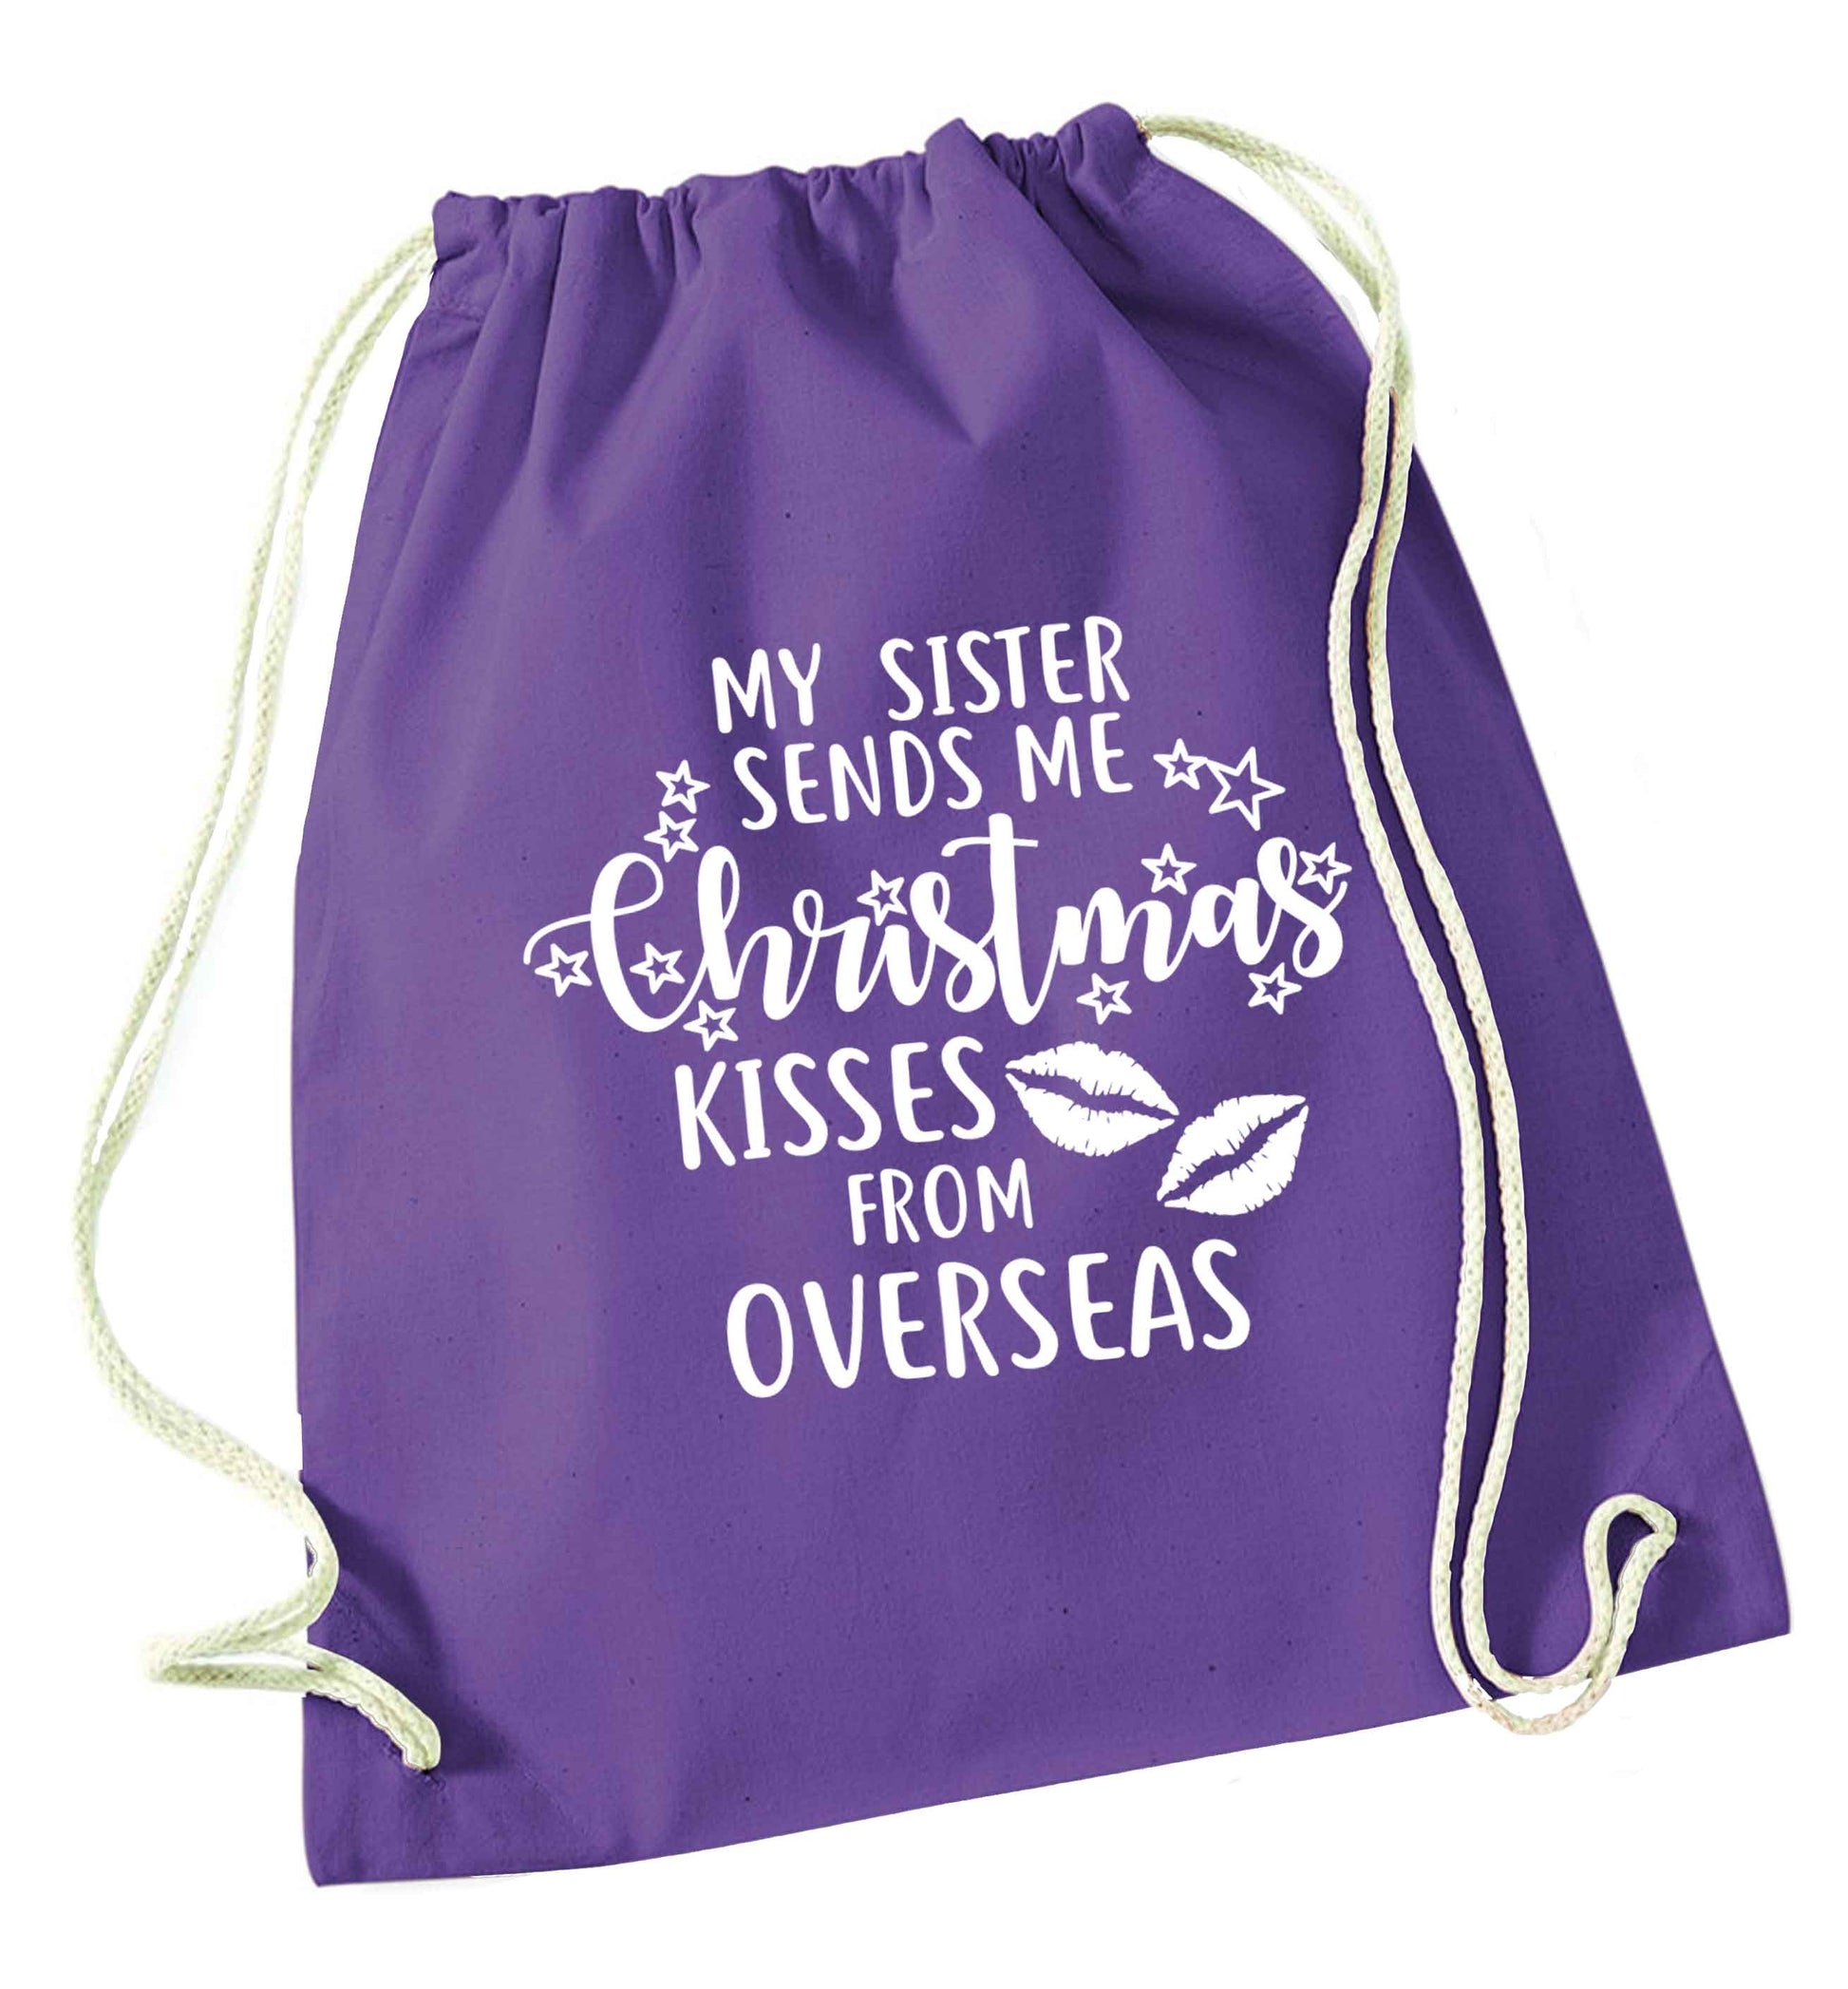 Grandad Christmas Kisses Overseas purple drawstring bag